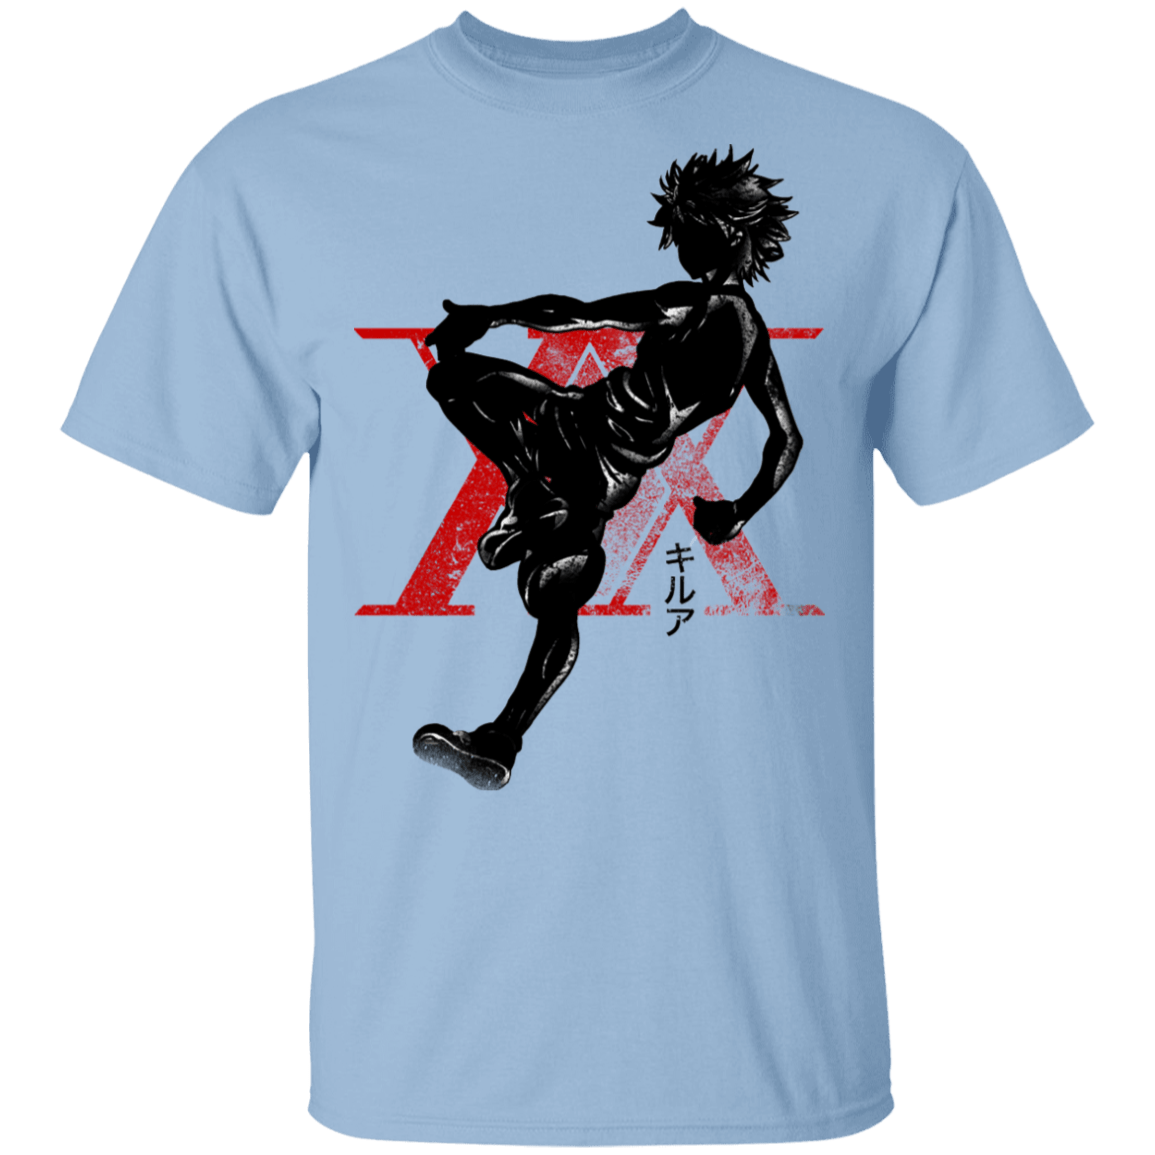 Viscose HxH T-Shirt - Anime T-Shirt